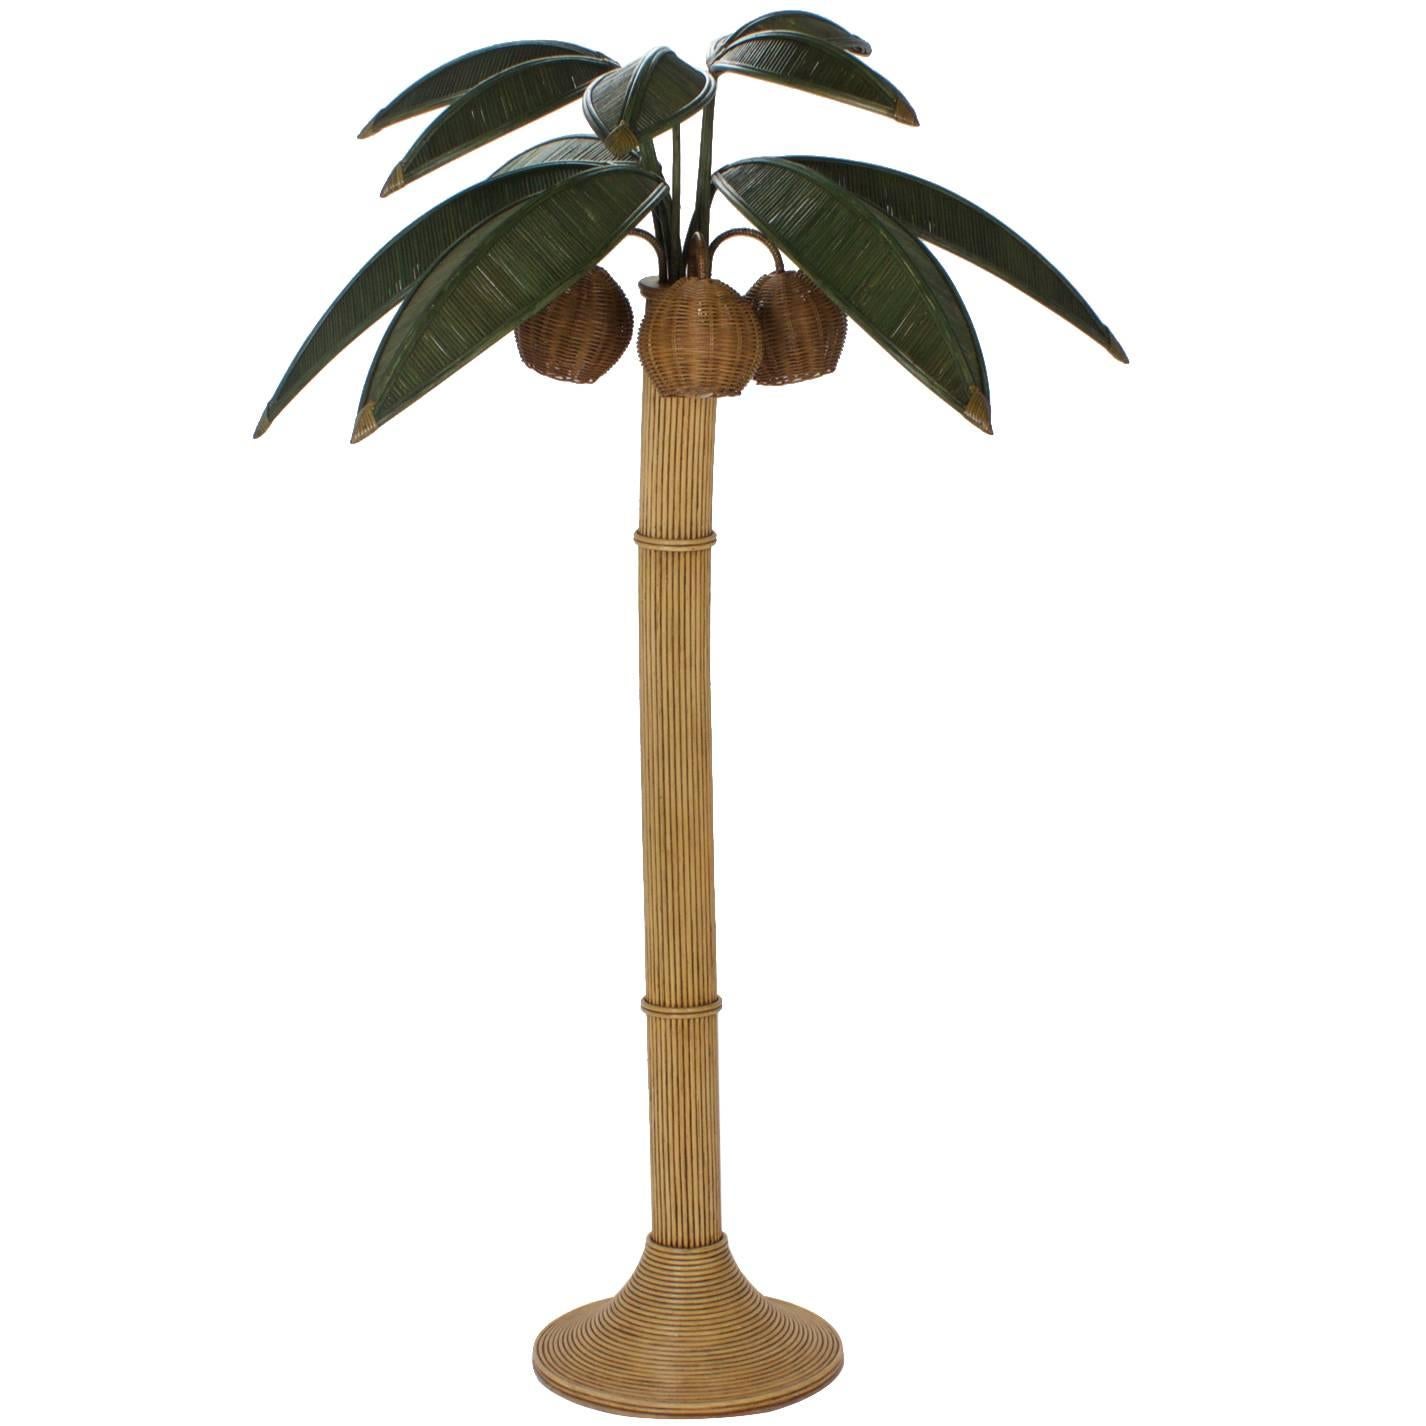  Stylized Reed Palm Tree Floor Lamp